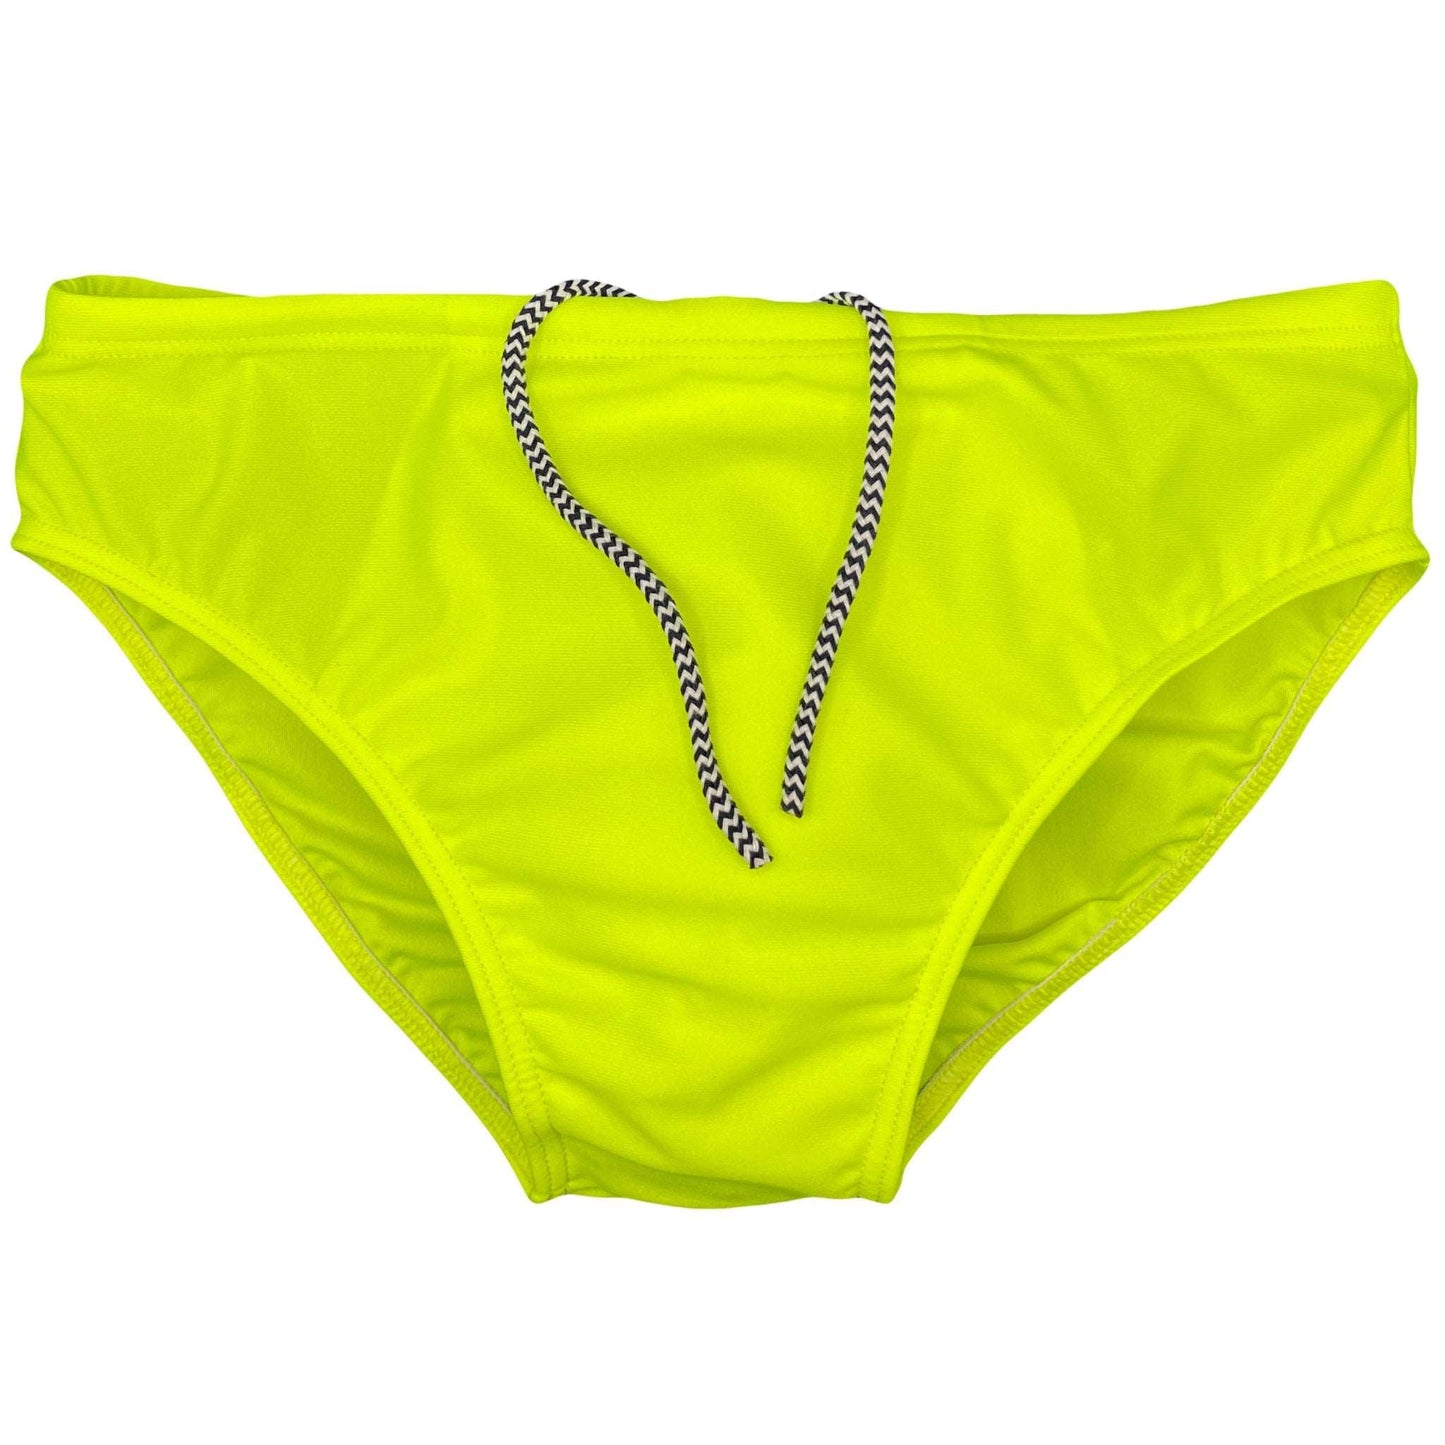 CIRCA75 Men's Swim Brief - Yellow